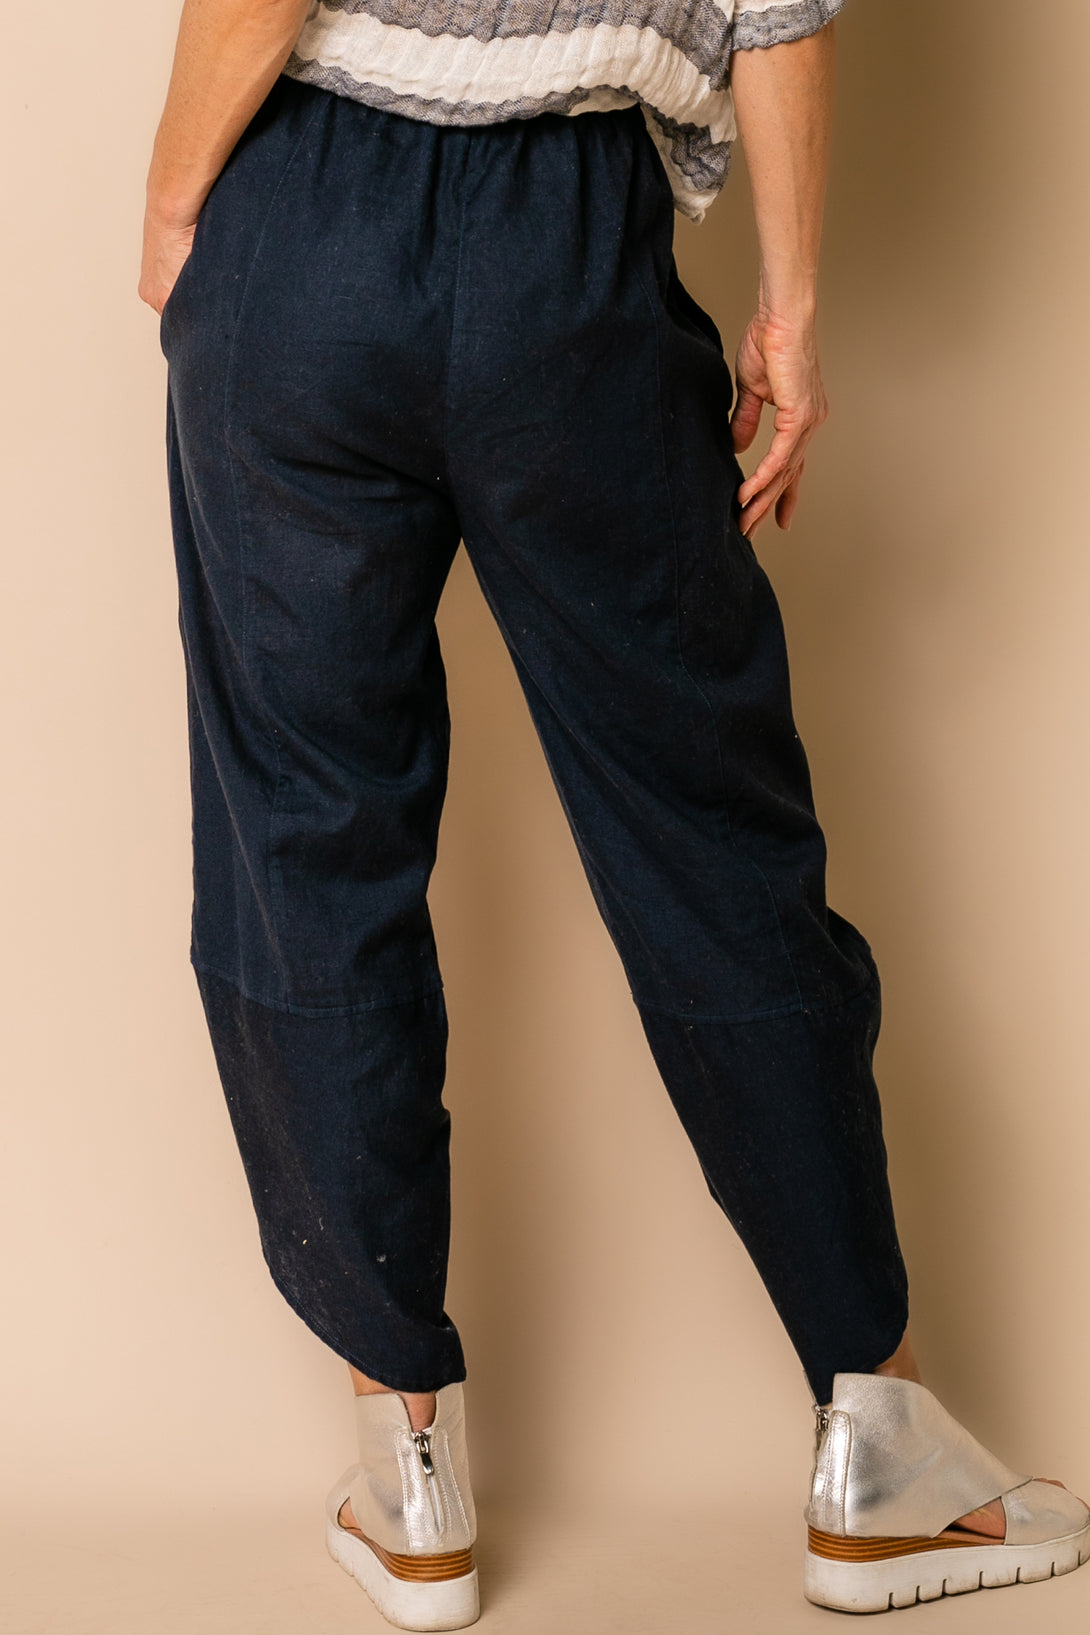 Rowen Linen Blend Pants in Navy - Imagine Fashion